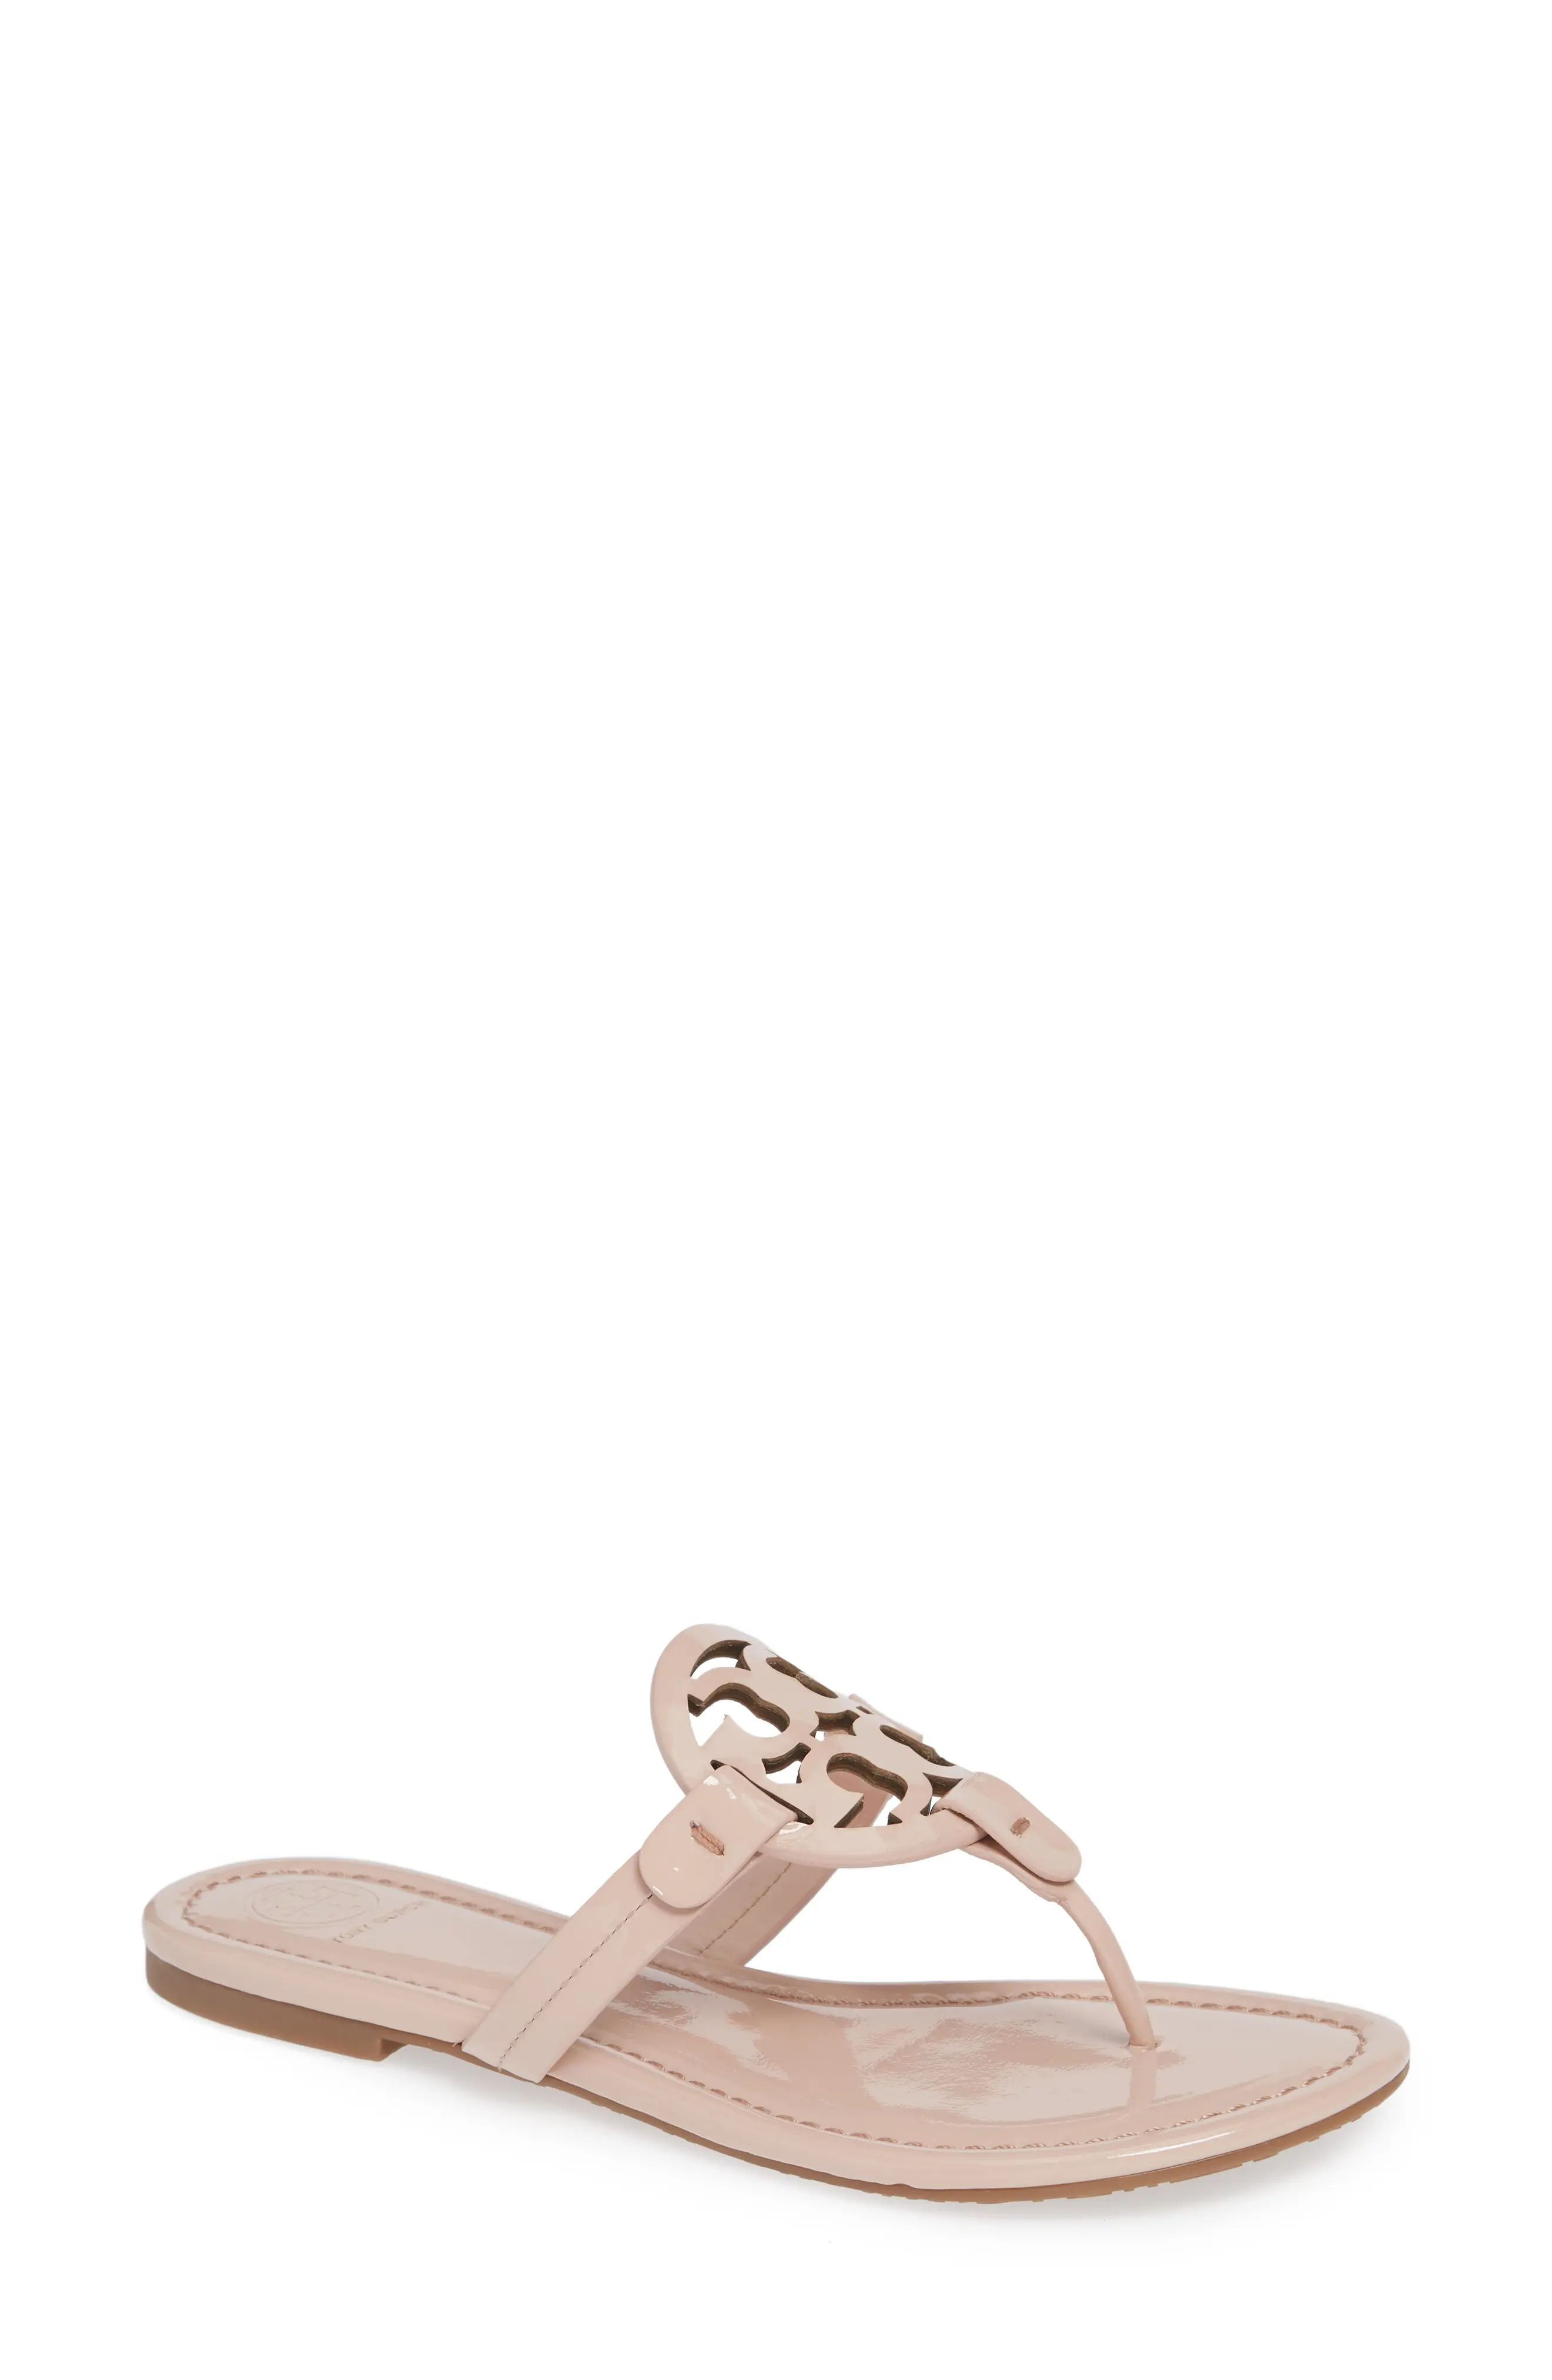 Women's Tory Burch Miller Sandal, Size 10 M - Pink | Nordstrom